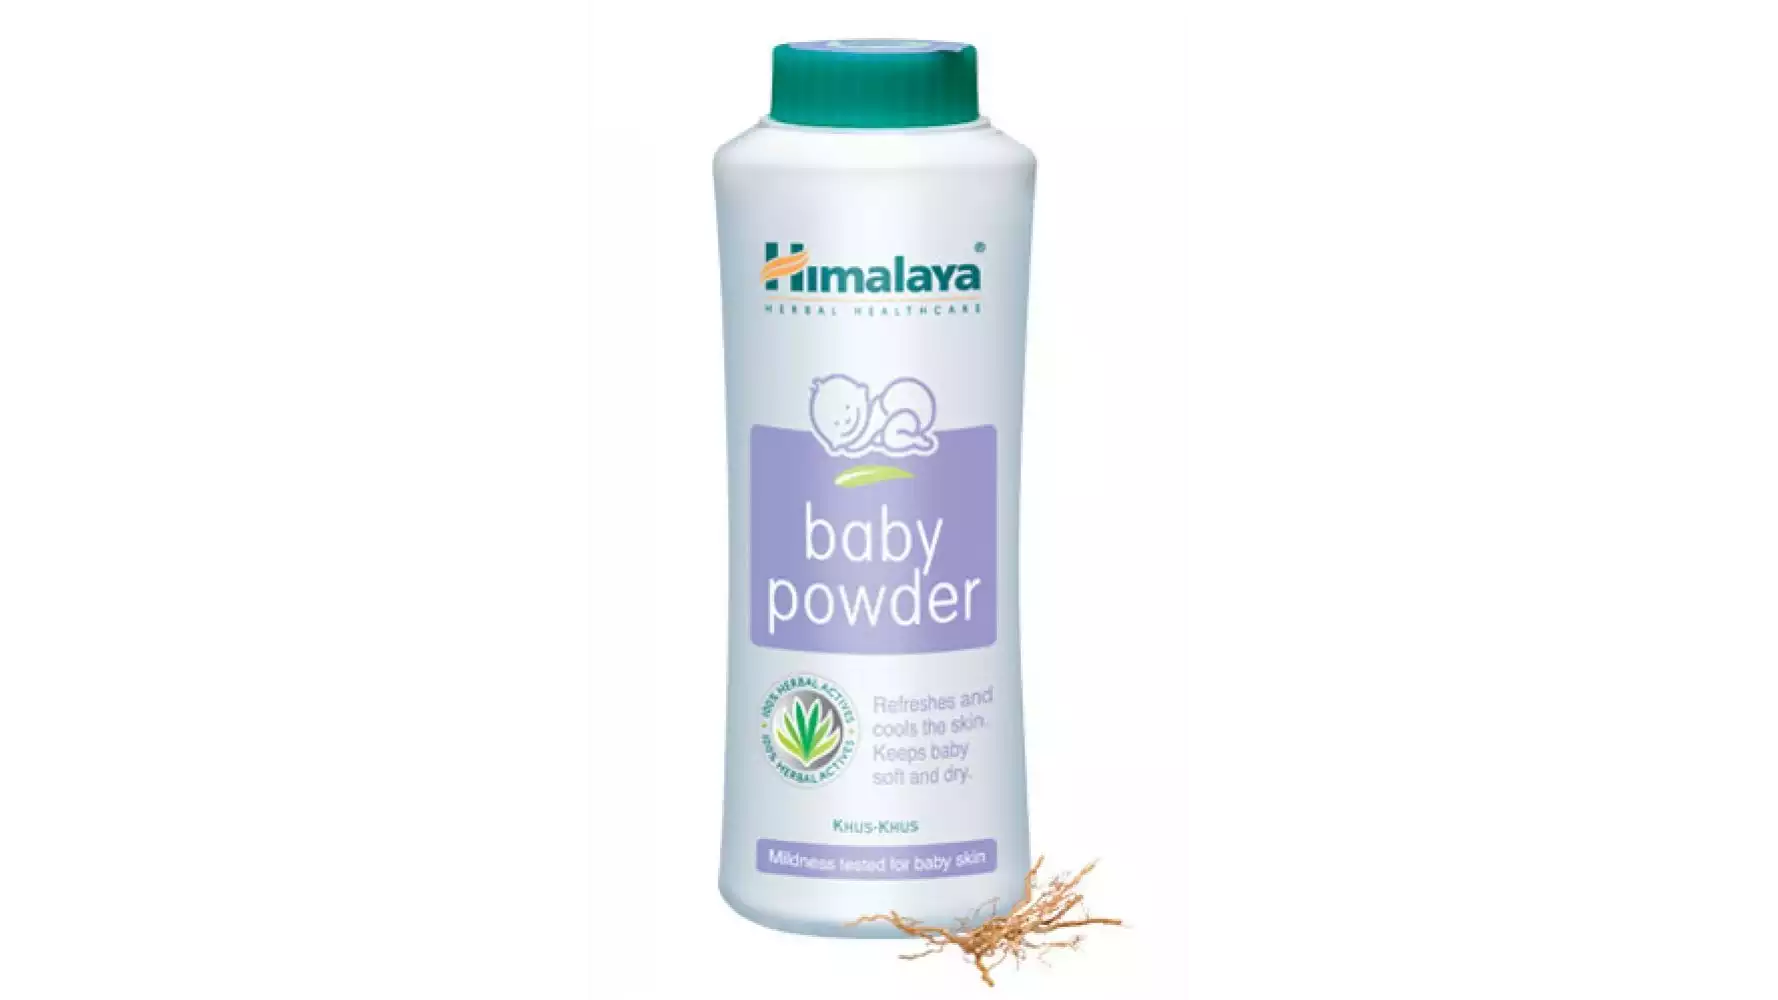 Himalaya Baby Powder (100g)